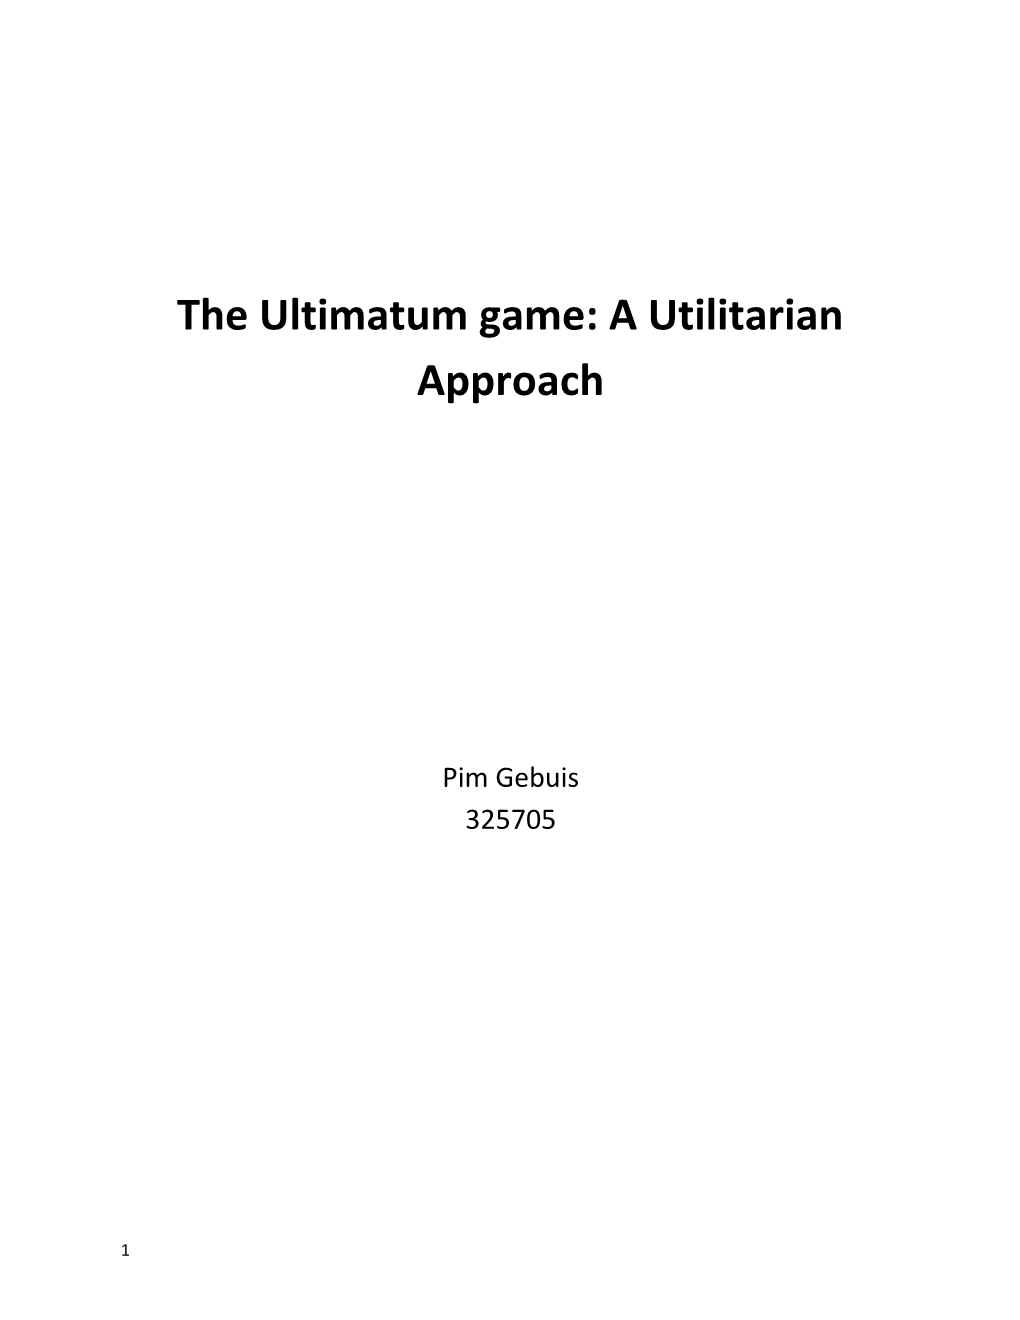 The Ultimatum Game: a Utilitarian Approach